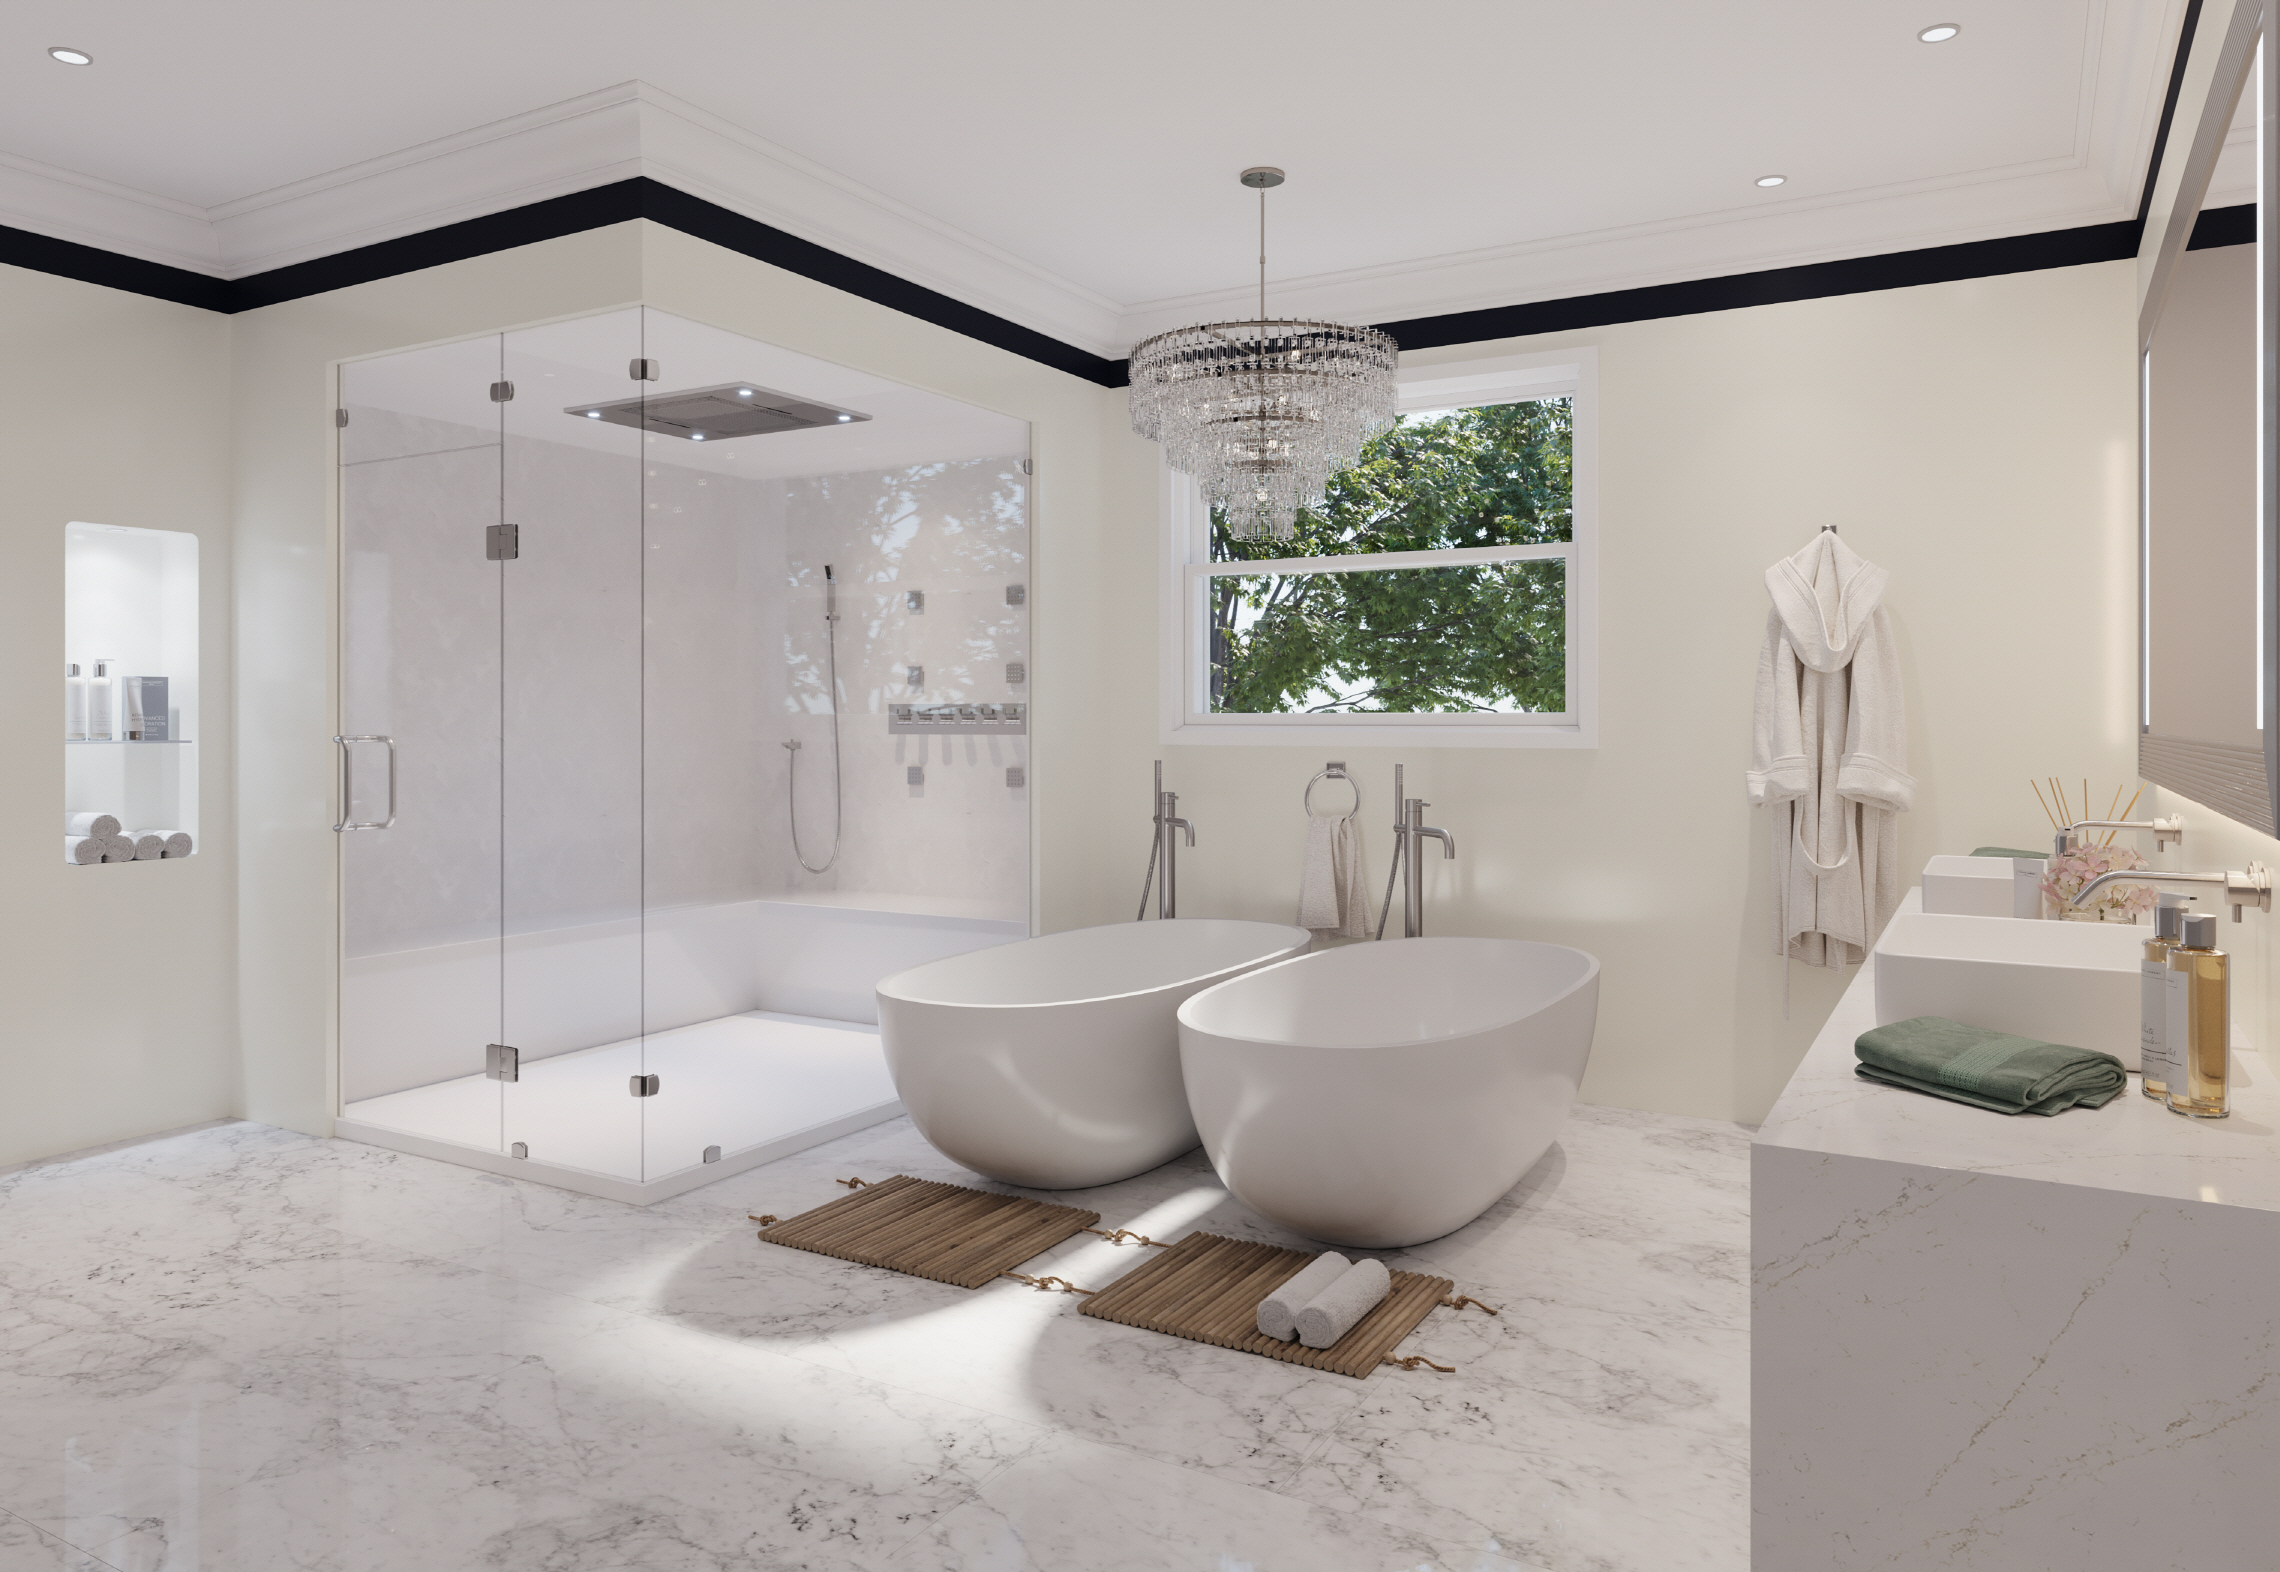 Luxurious contemporary guest bathroom: decadent lighting, flooring, furniture, colors.